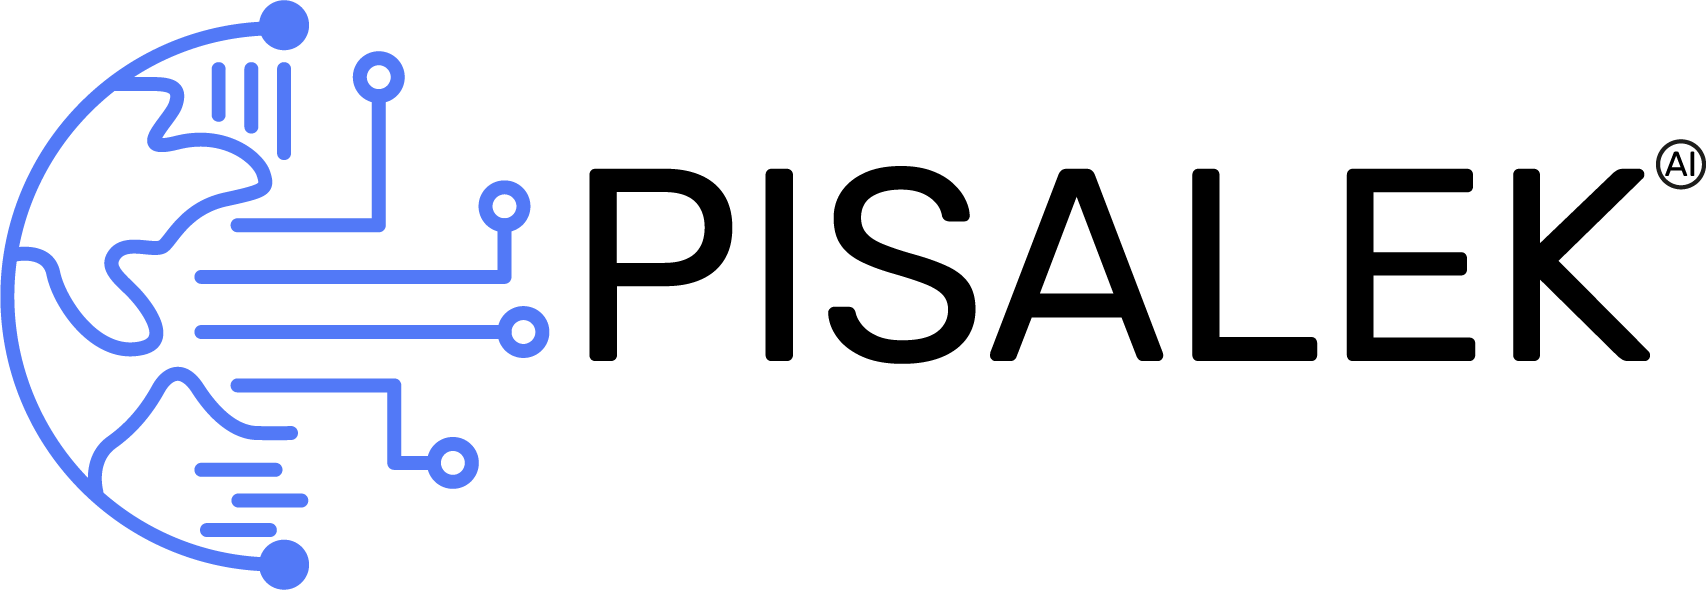 campfa-footer-logo